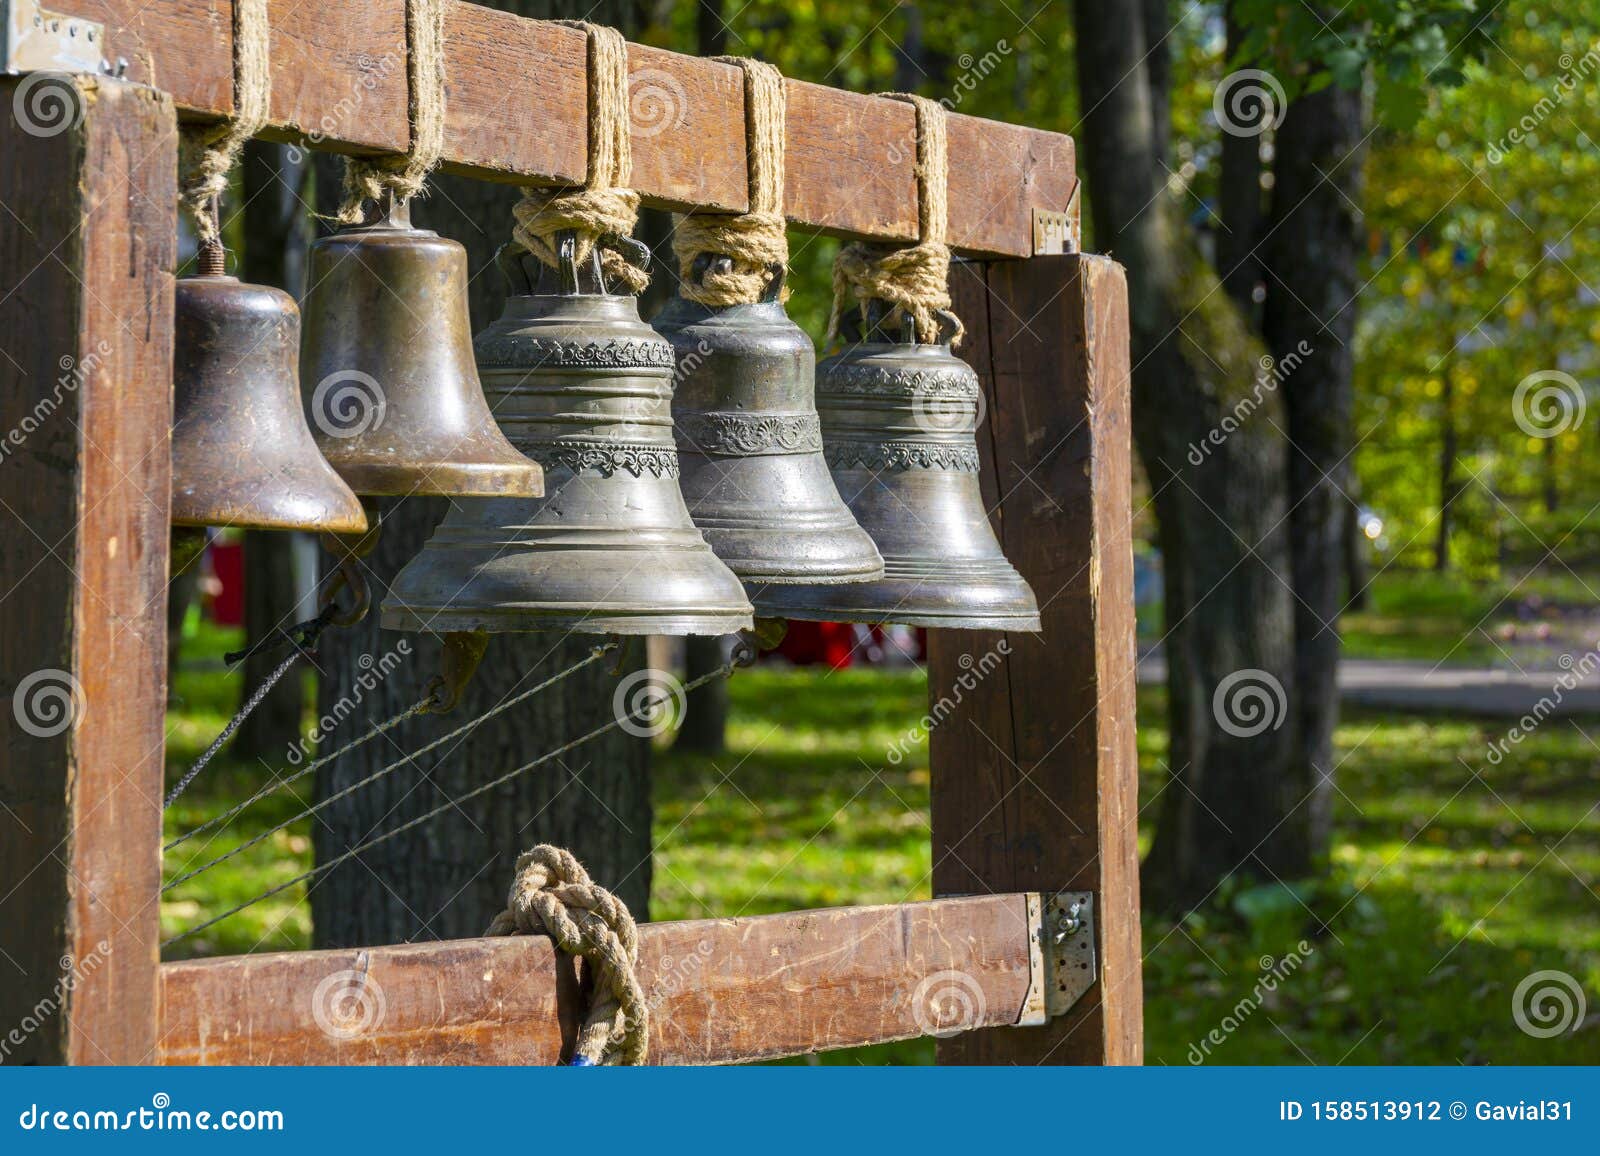 History of Church Bells - Ancient Church Bells